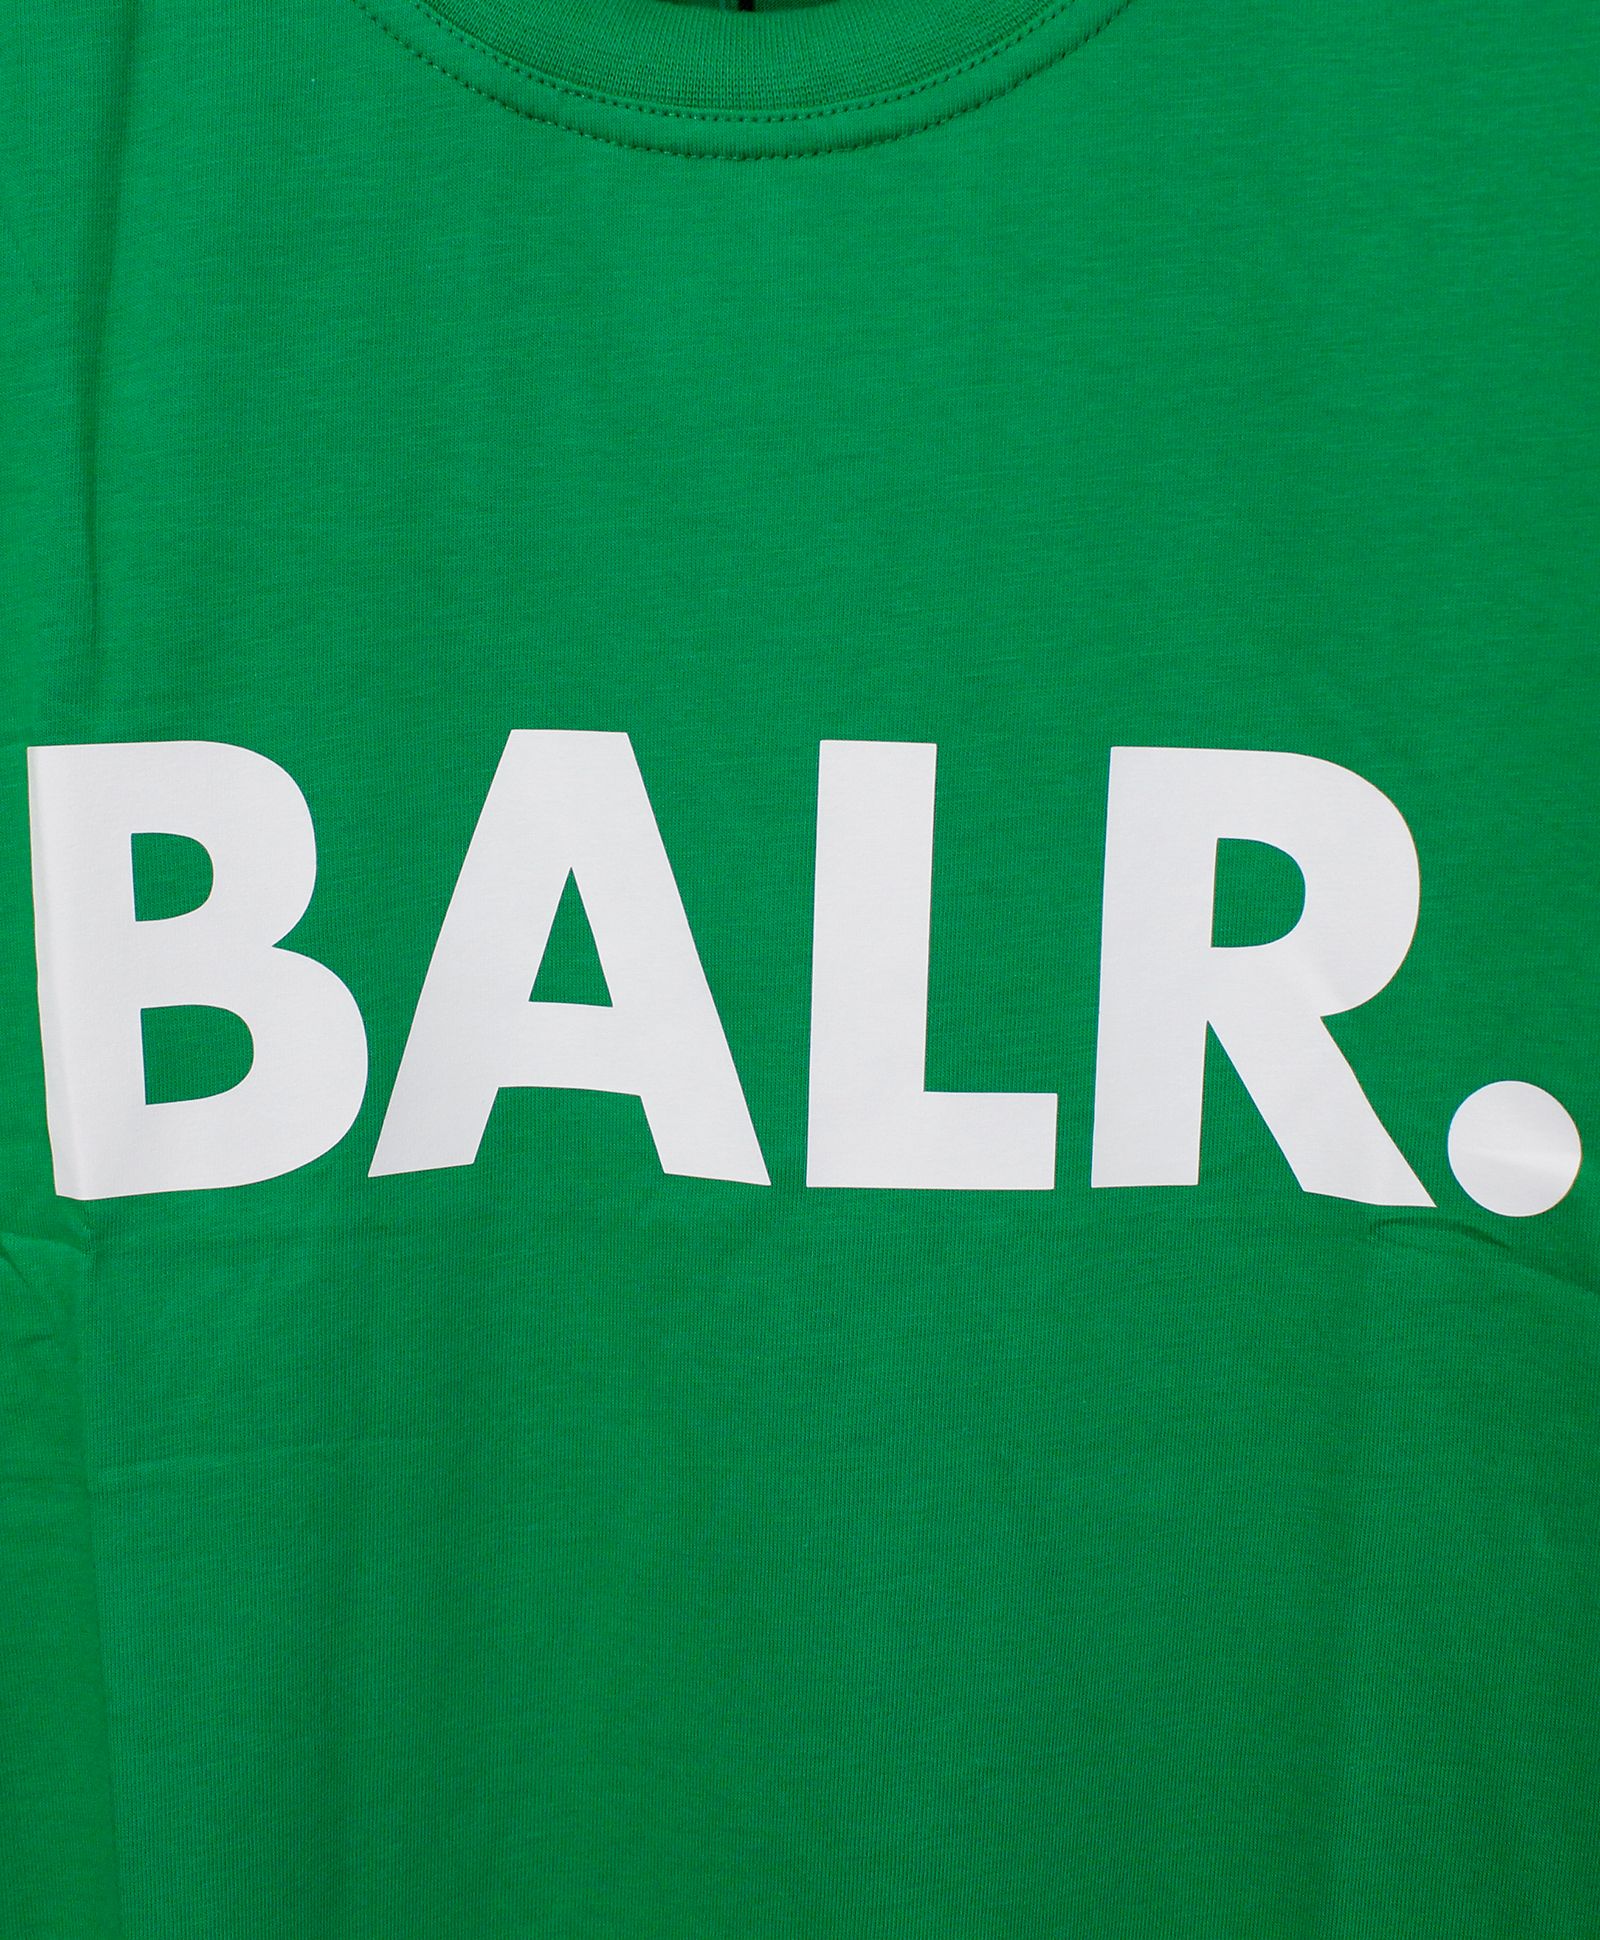 BALR. - ロゴプリントTシャツ / Brand straight t-Shirt / Putting